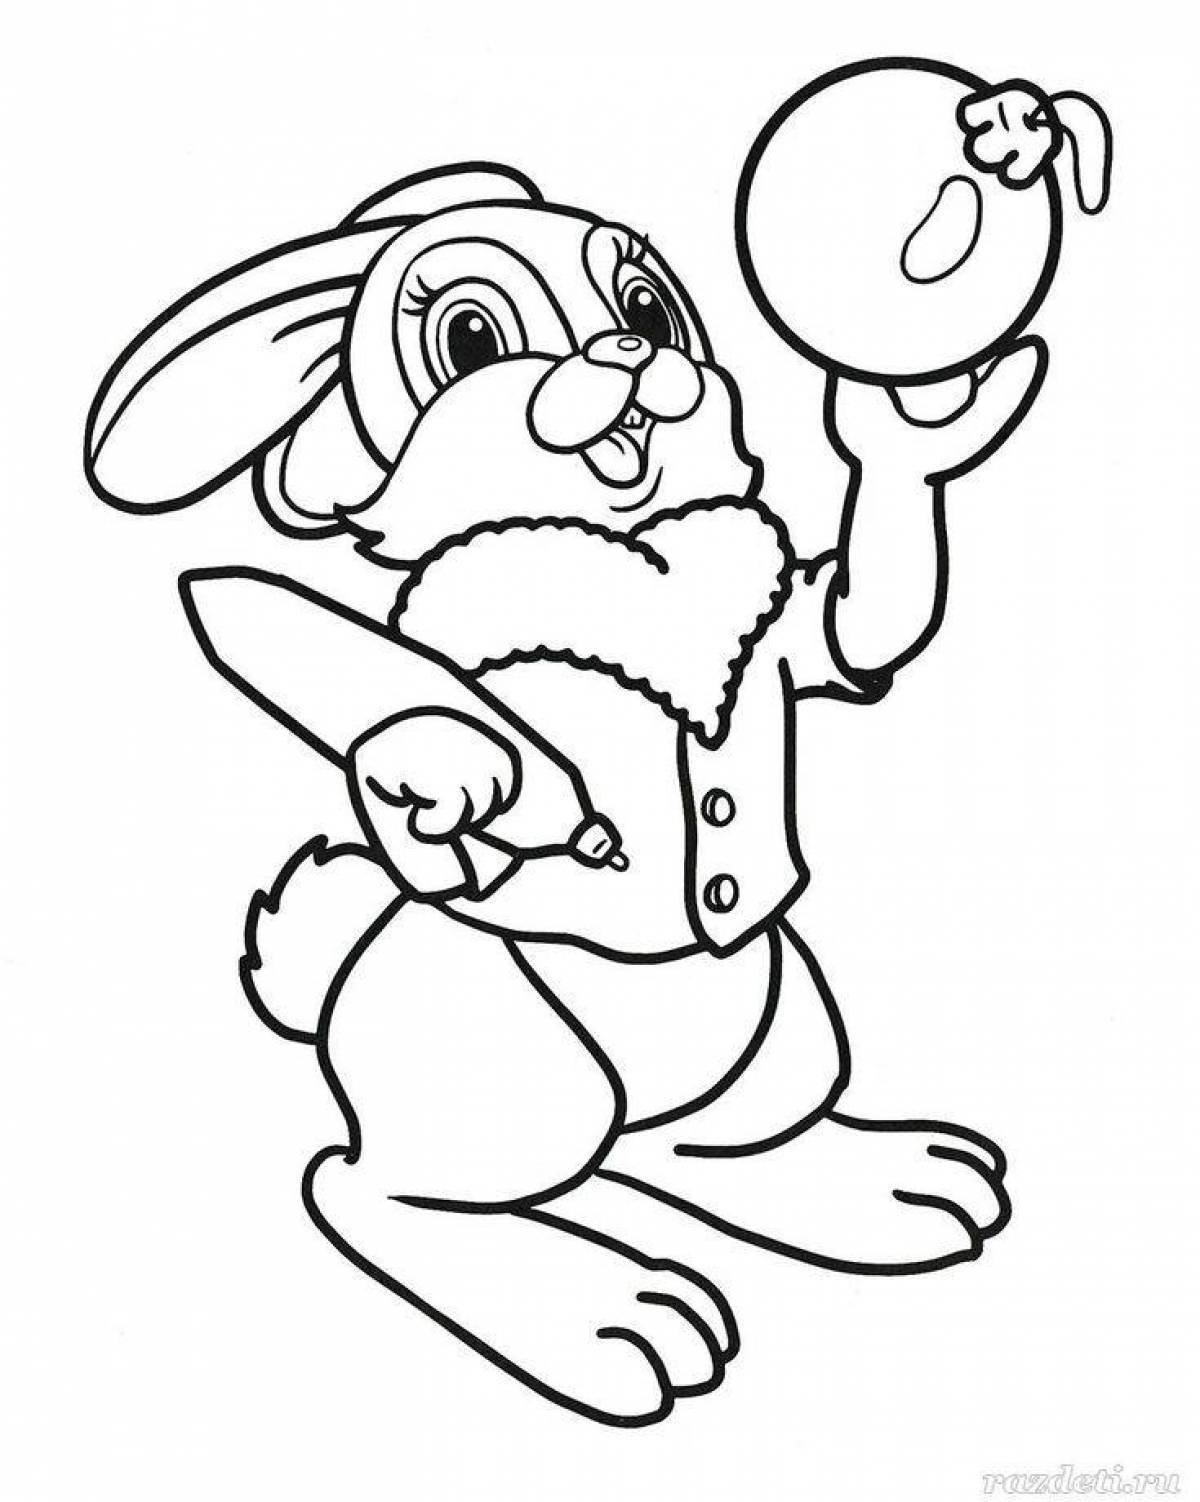 Fluffy Christmas bunny coloring book